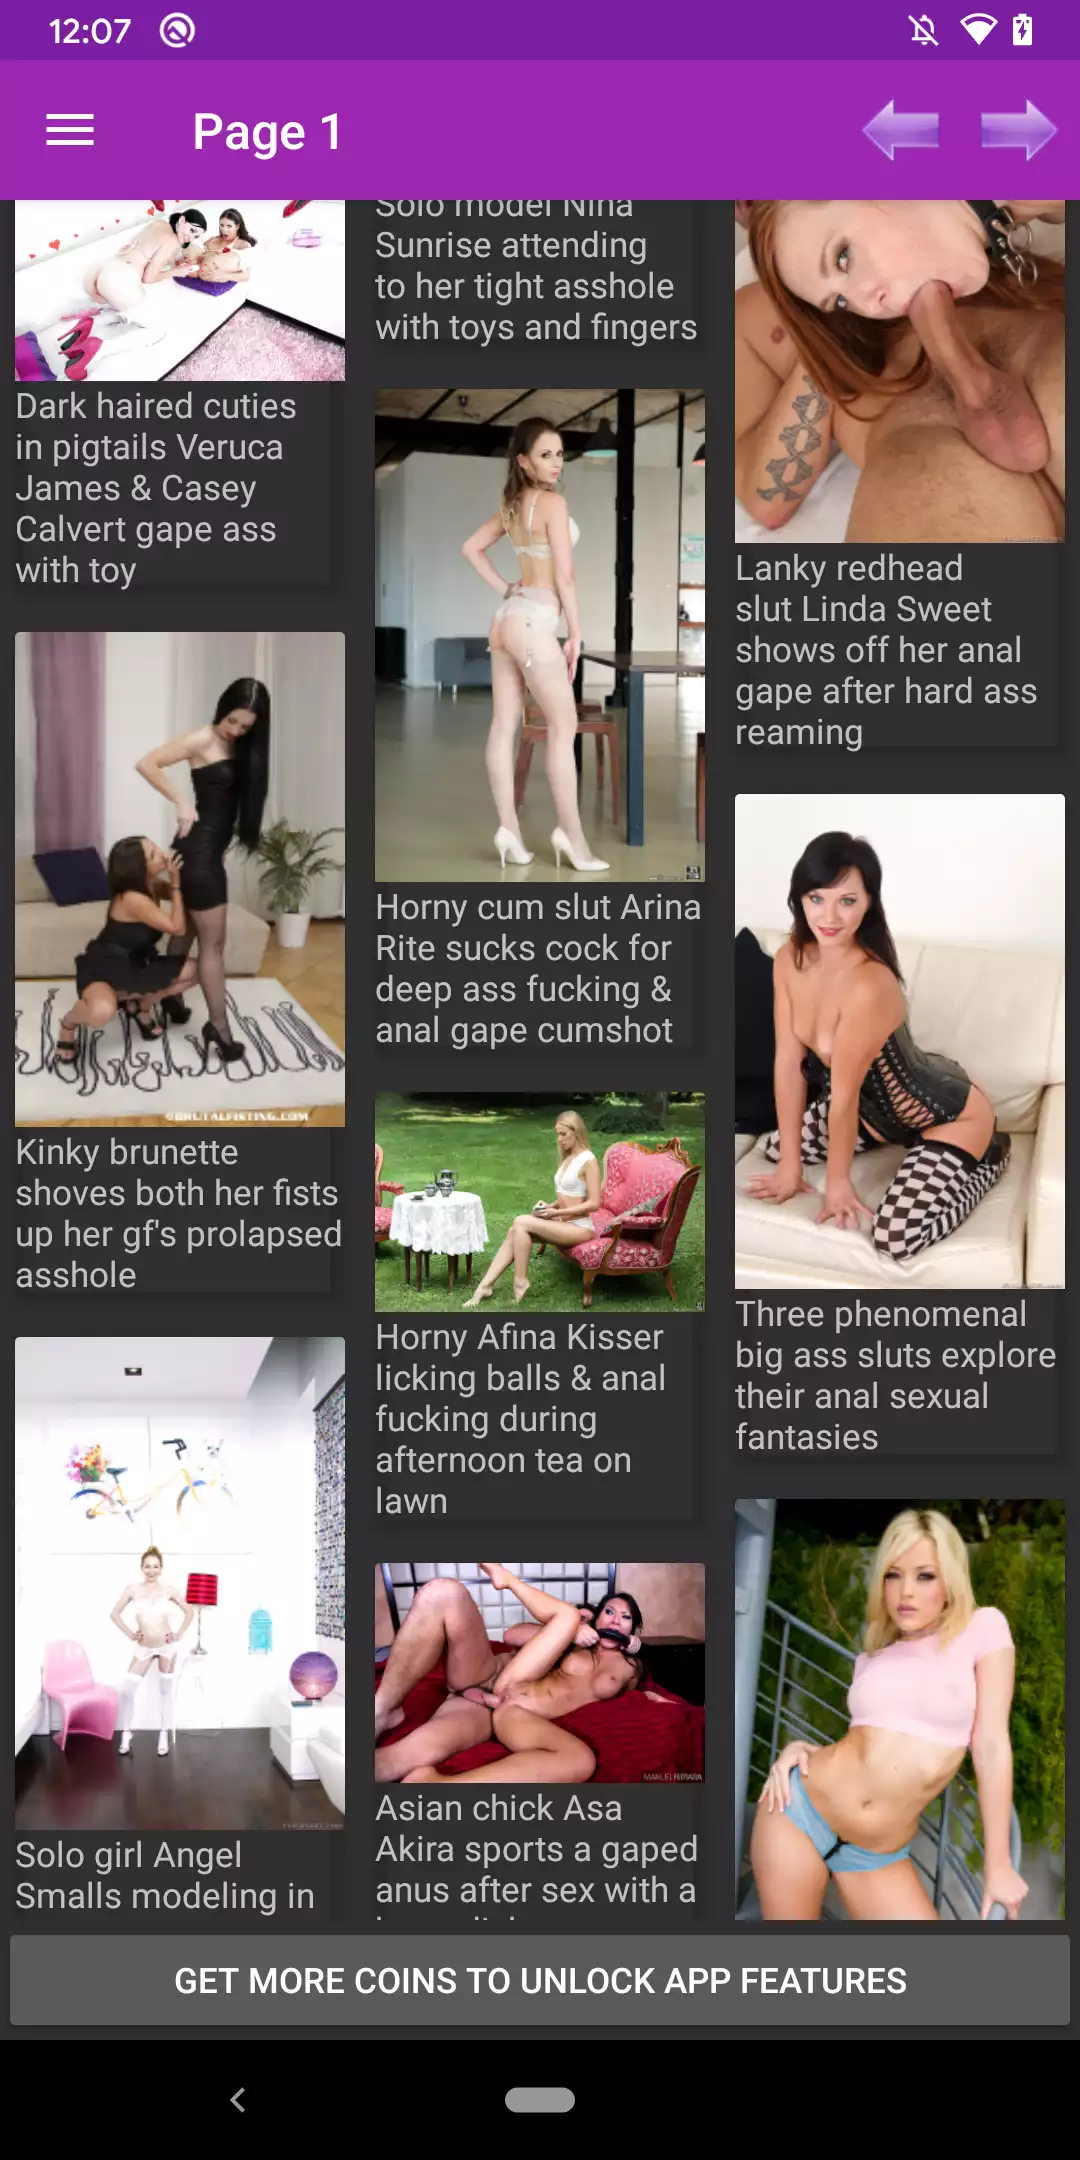 Anal Gape futanari,gape,hentai,app,pornstars,porn,photo,anal,collection,image,anime,wallpapers,download,pictures,sexy,pornstar,apps,picture,best,galleries,stars